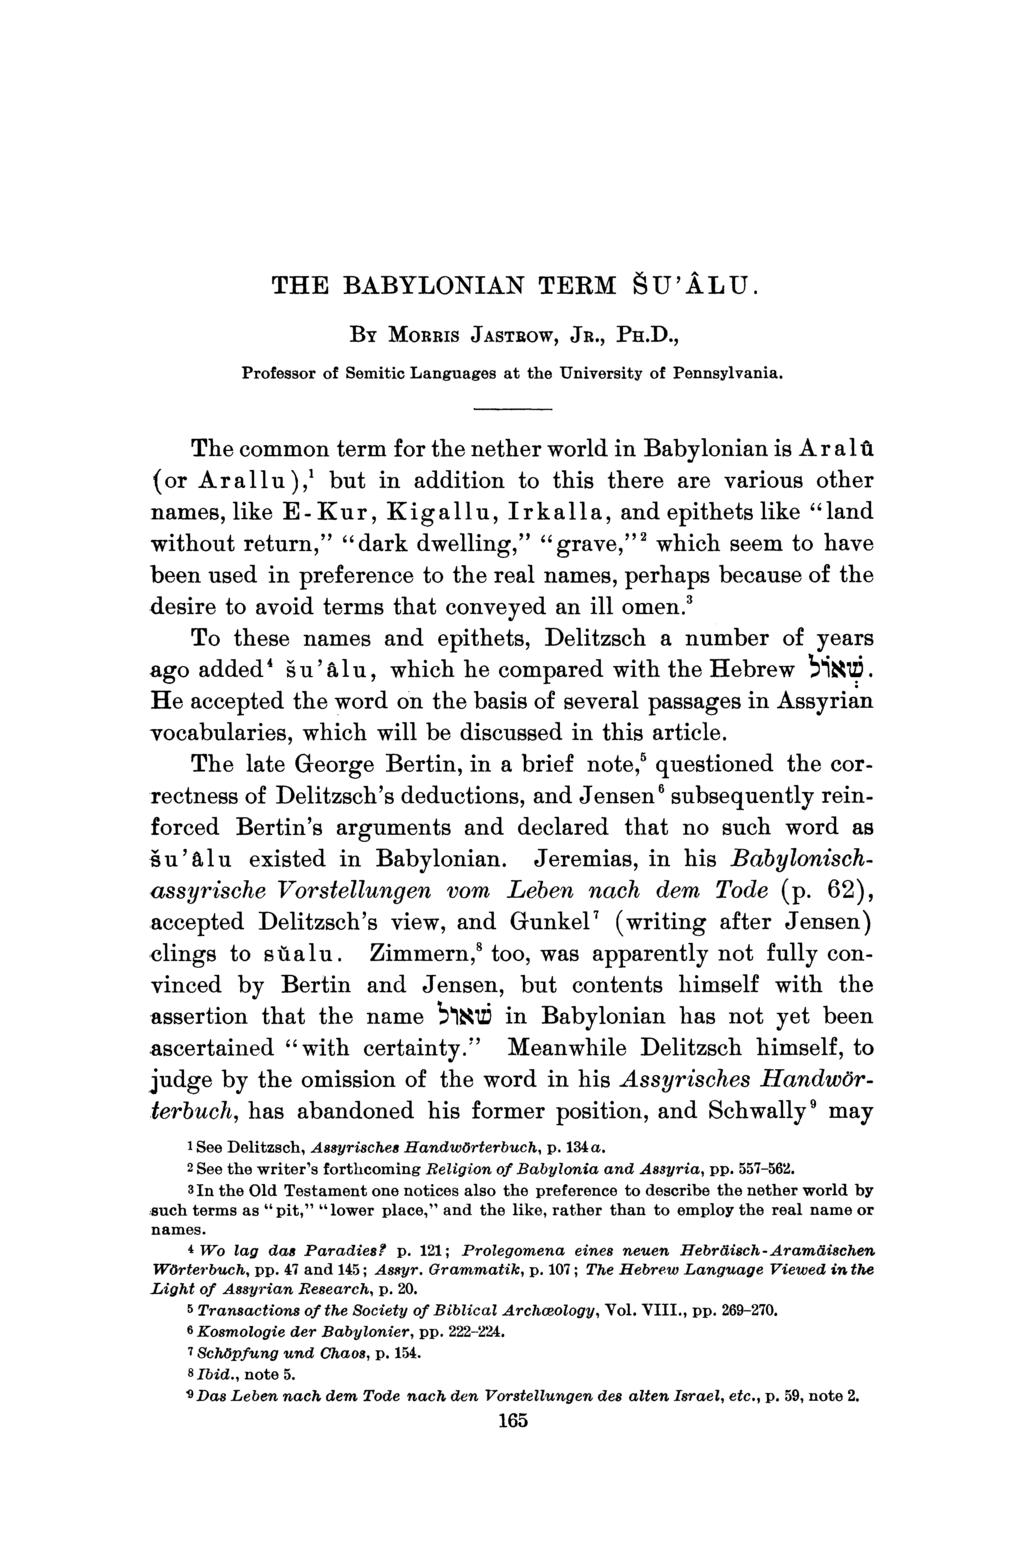 THE BABYLONIAN TERM U'ALU. BY MoRRIs JASTROW, JR., PH.D., Professor of Semitic Languages at the University of Pennsylvania.